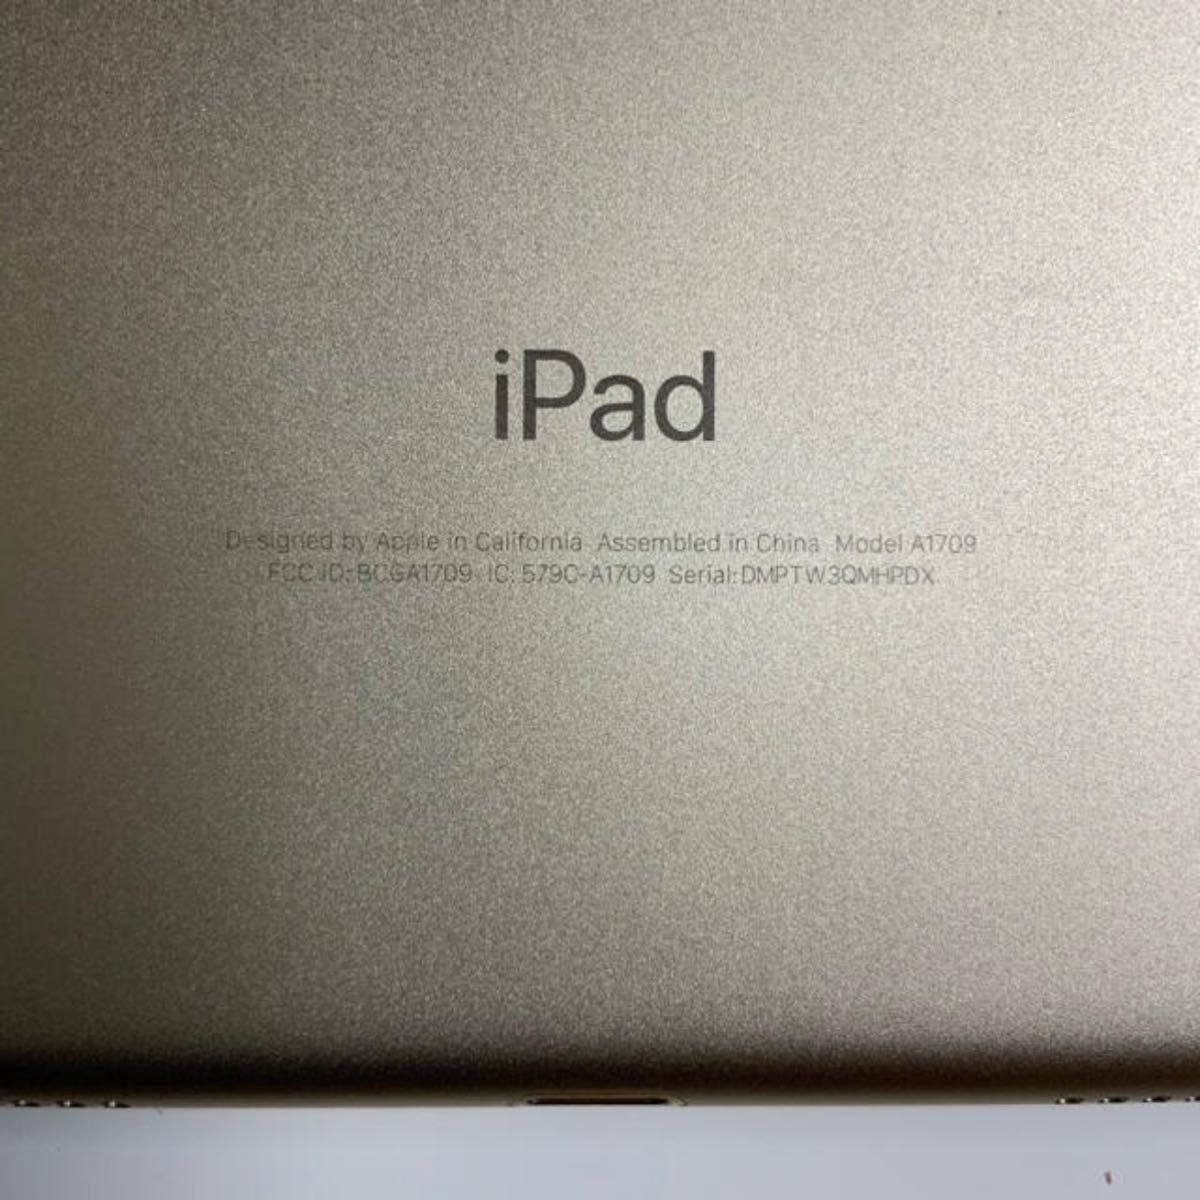 iPad Pro 10.5 セルラーモデル 256GB  ケース　セット